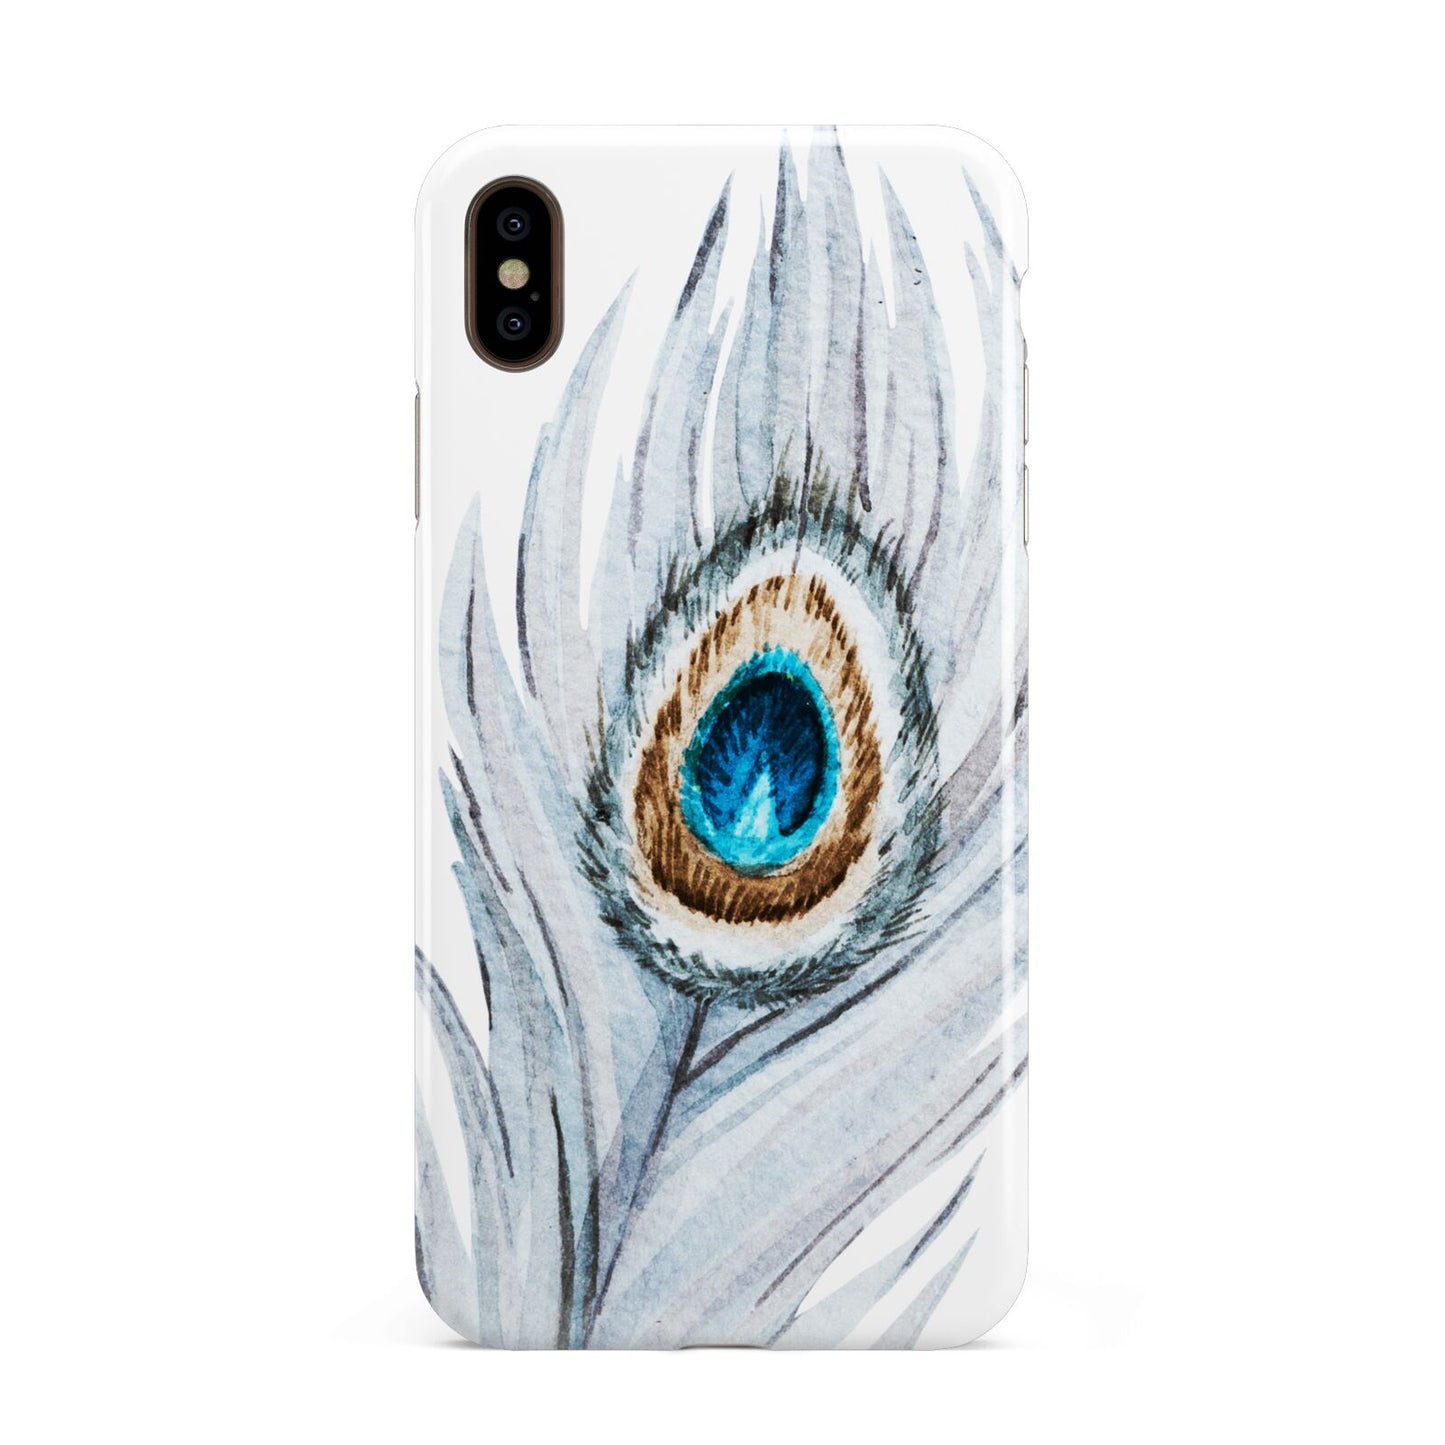 Peacock Apple iPhone Xs Max 3D Tough Case